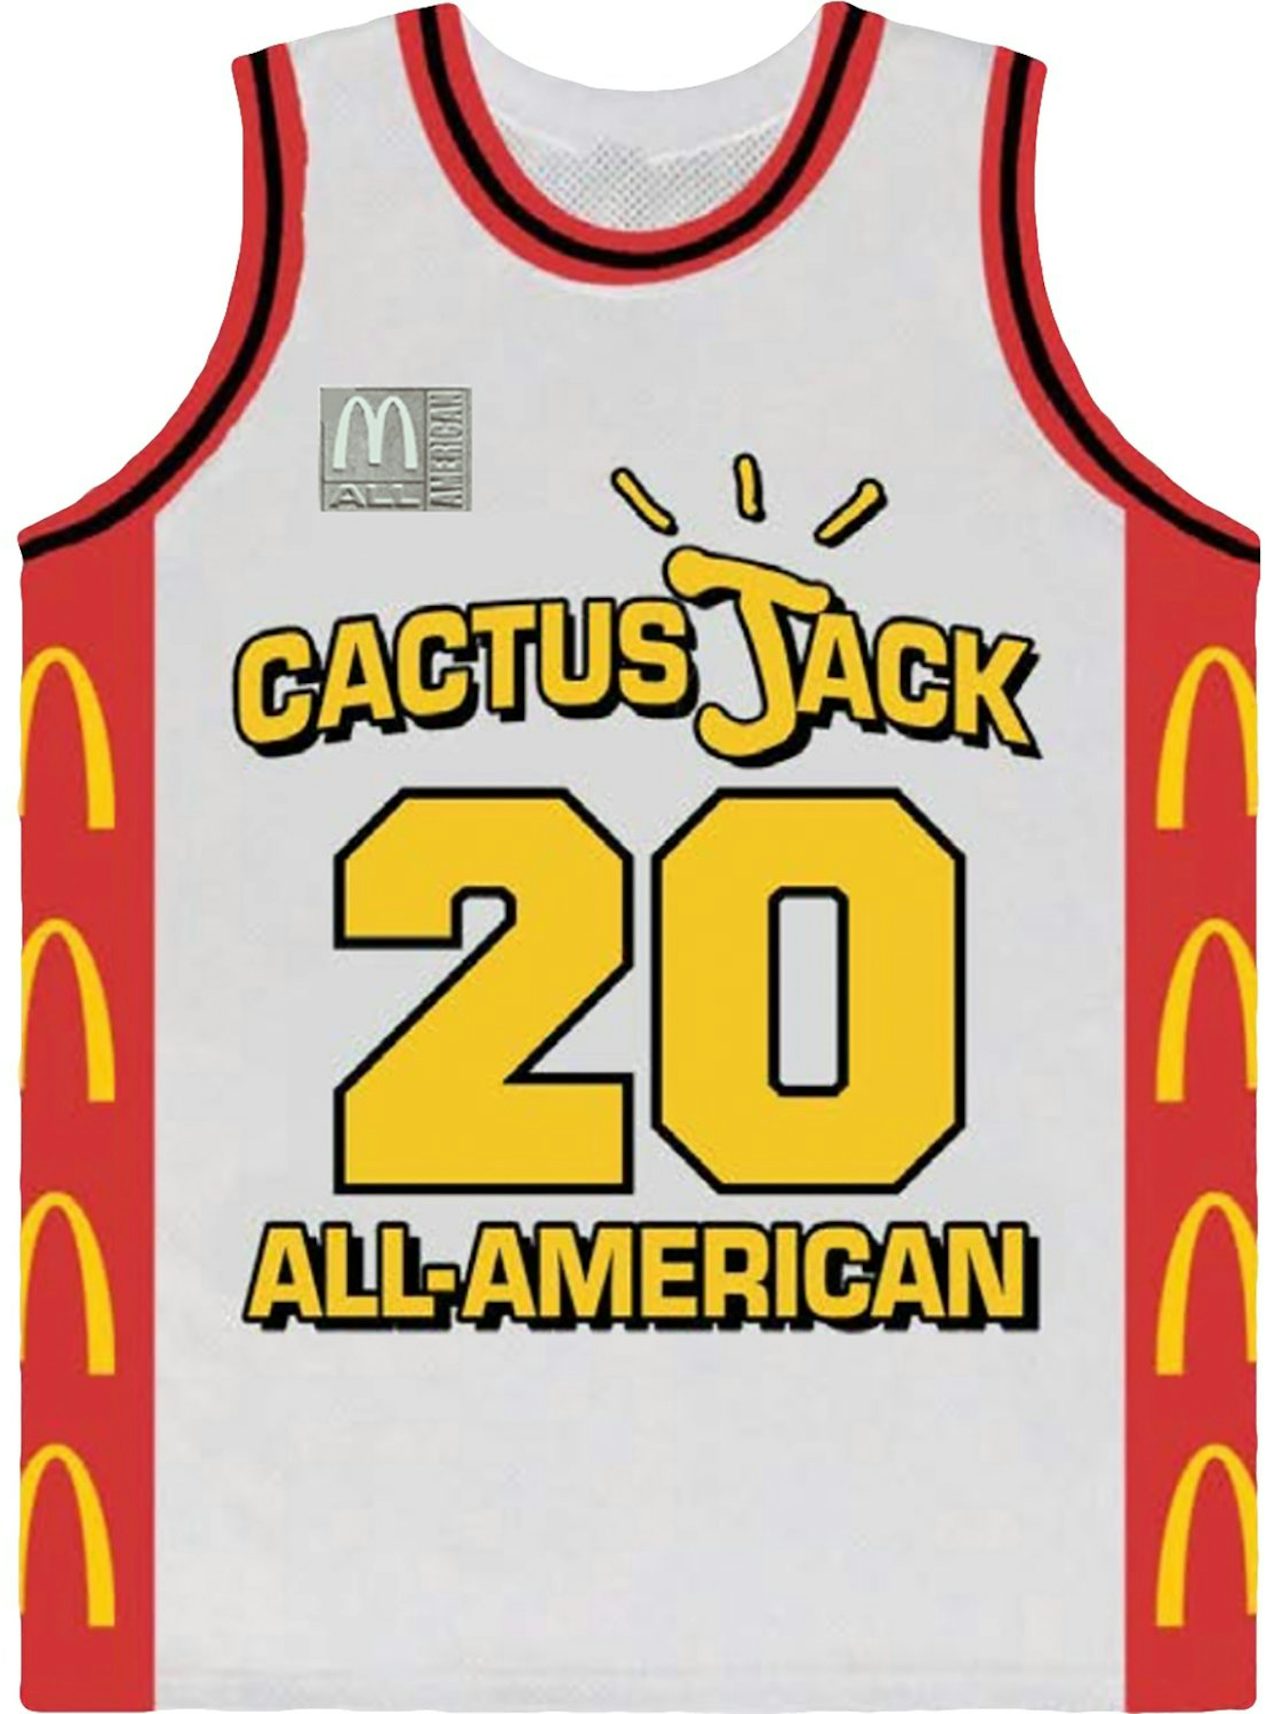 Cactus Jack x Nike White Baseball Jersey